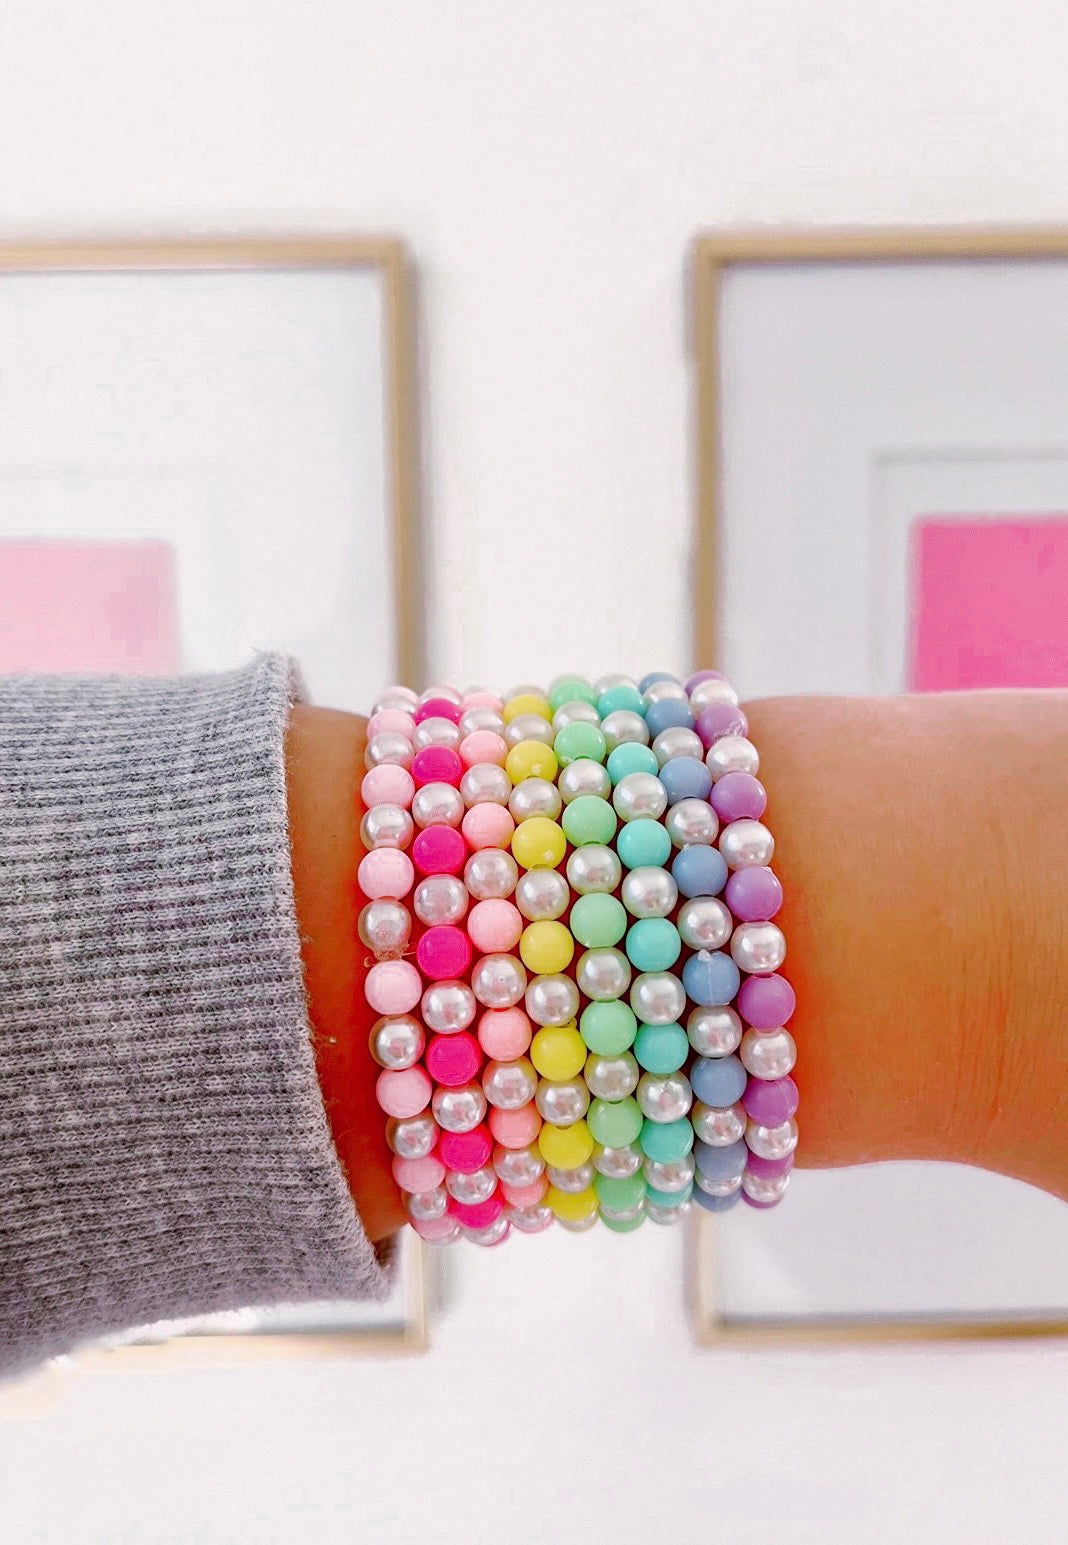 Small Pearl Color Bracelets